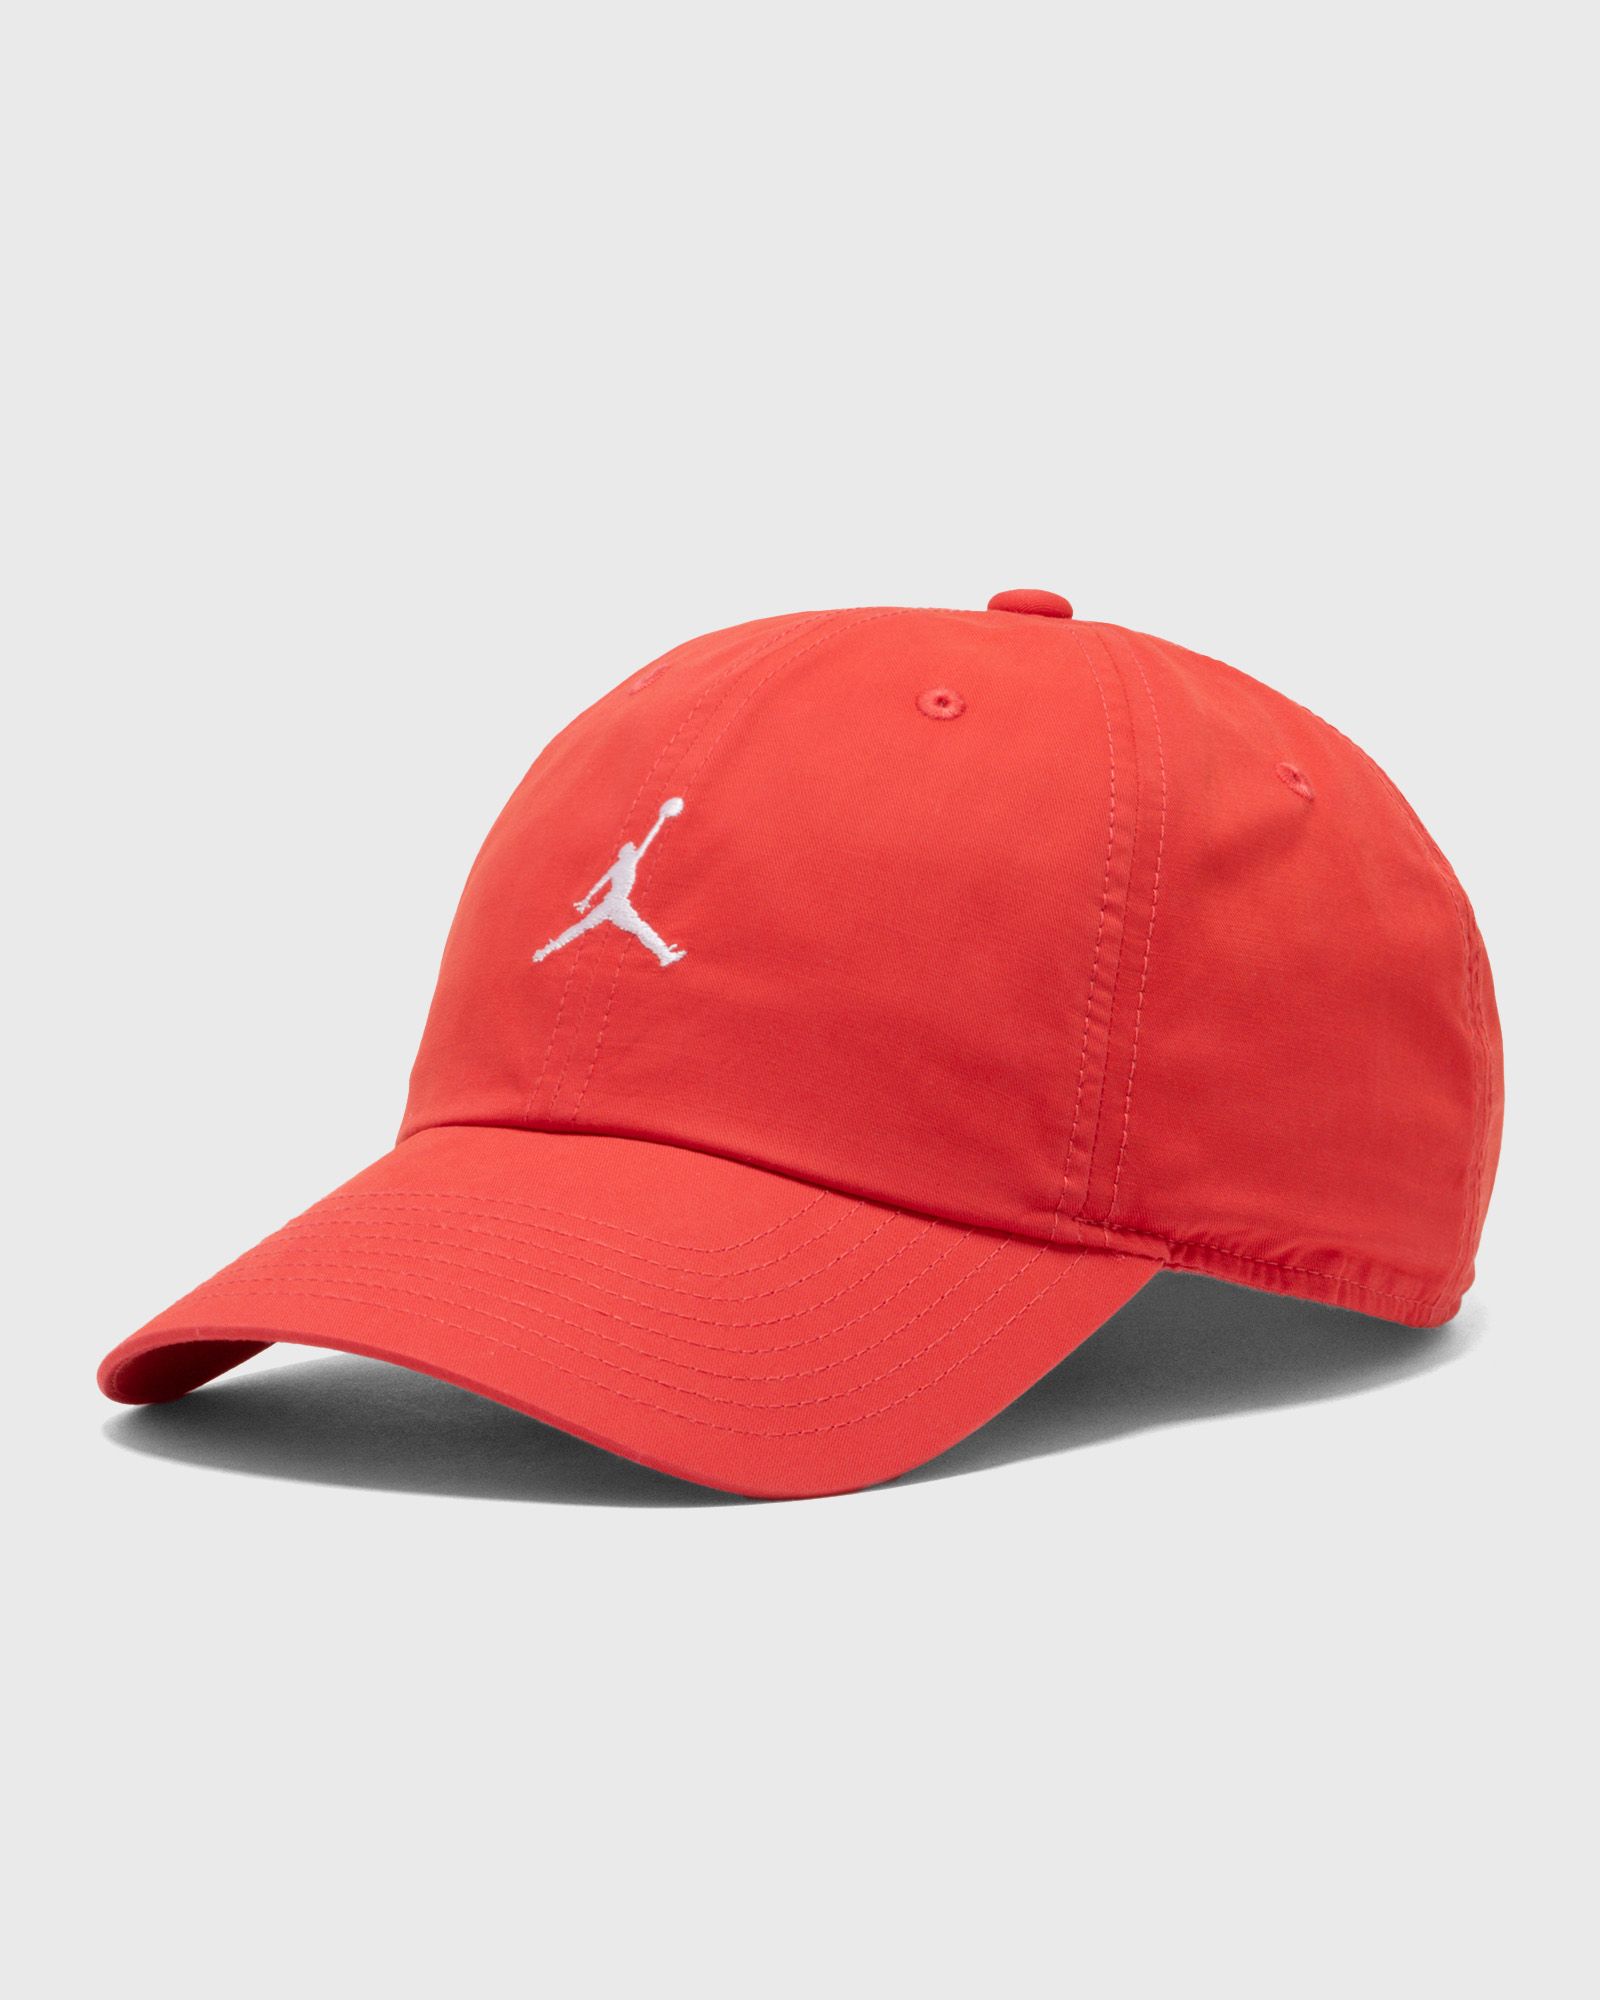 Jordan - club cap adjustable unstructured hat men caps red in größe:m/l